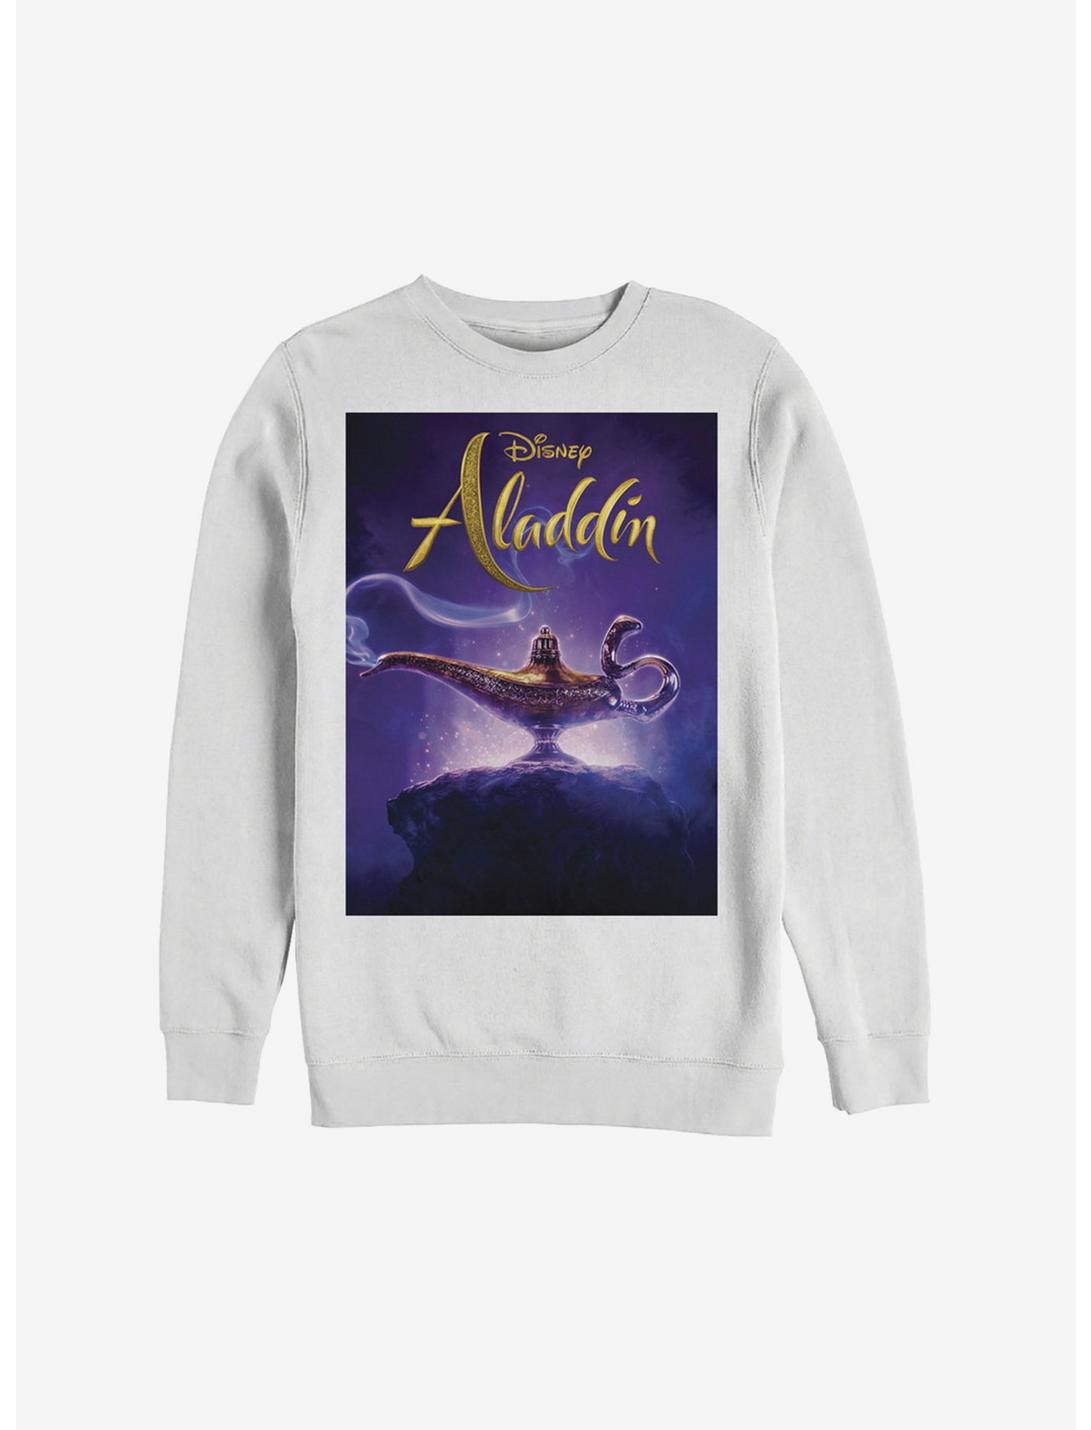 Disney Aladdin 2019 Live Action Cover Sweatshirt, WHITE, hi-res